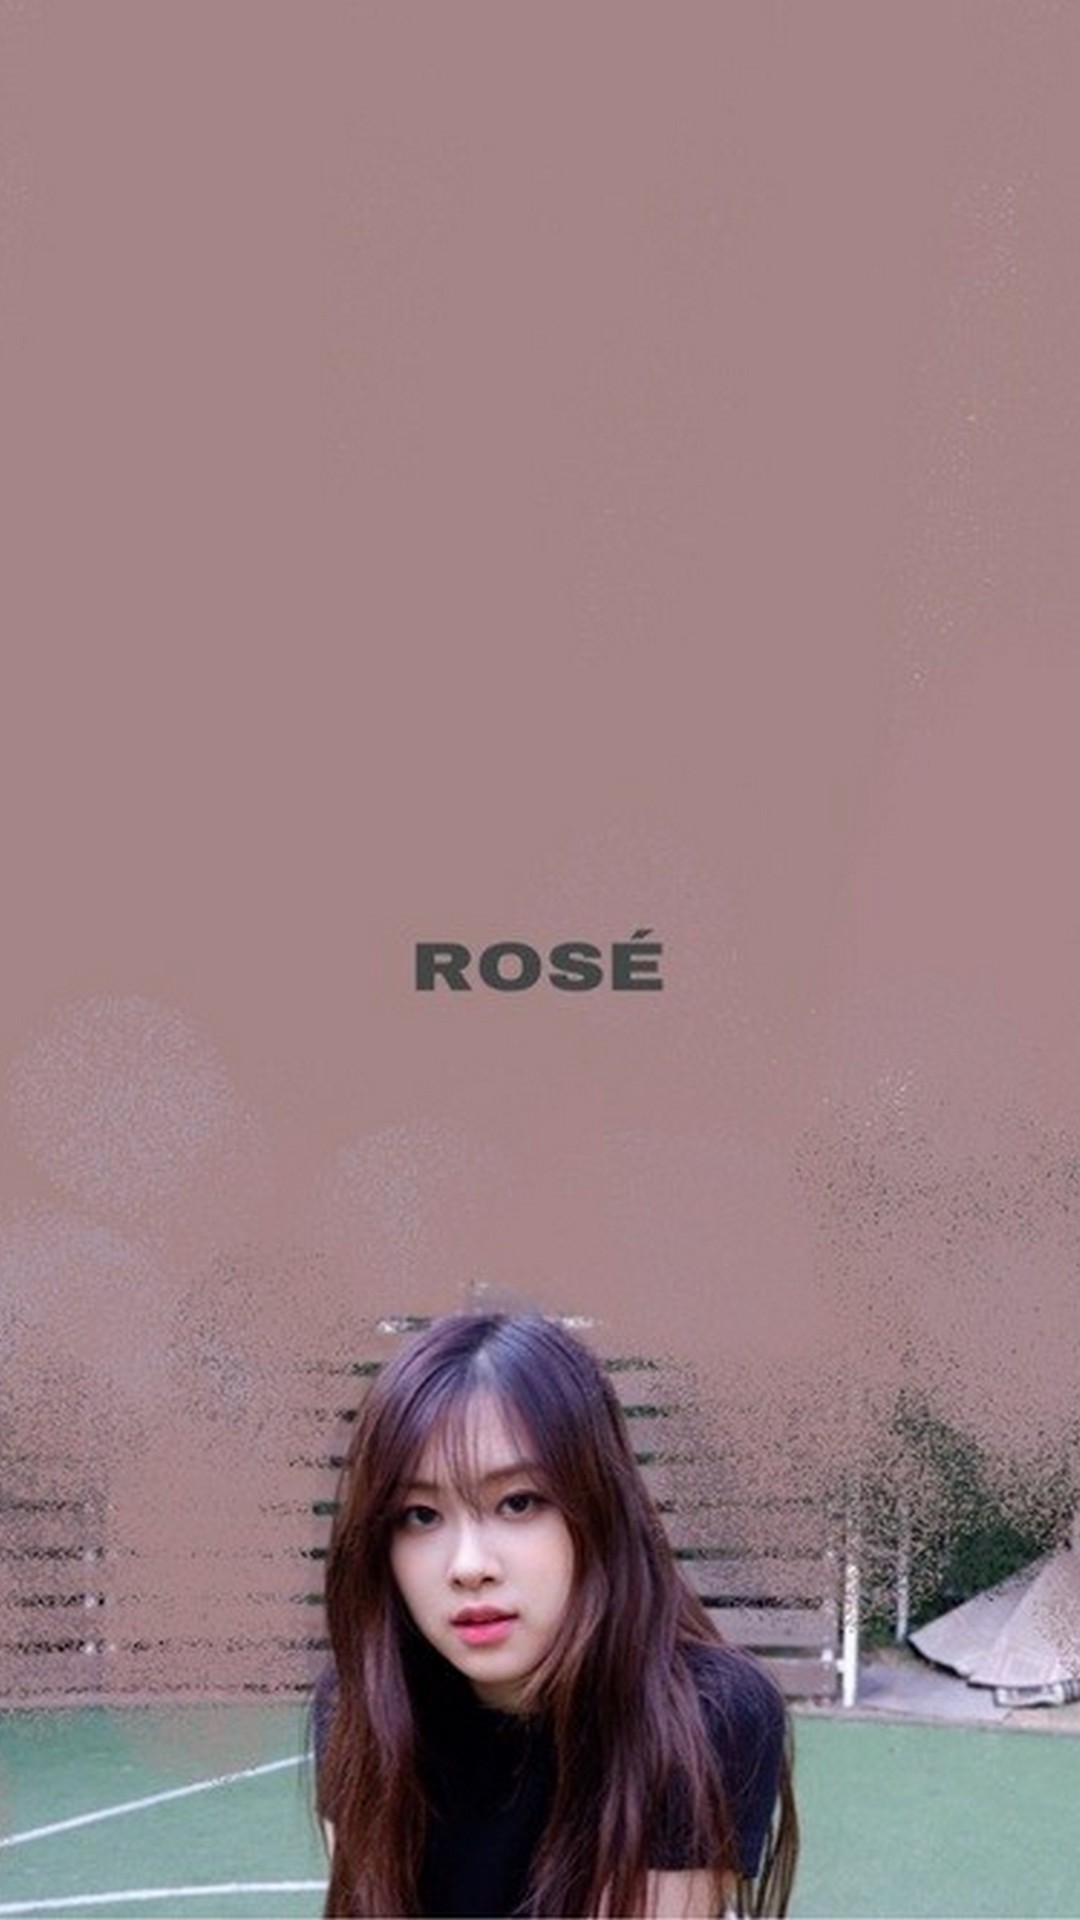 Rose Blackpink Iphone Wallpaper With High-resolution - HD Wallpaper 